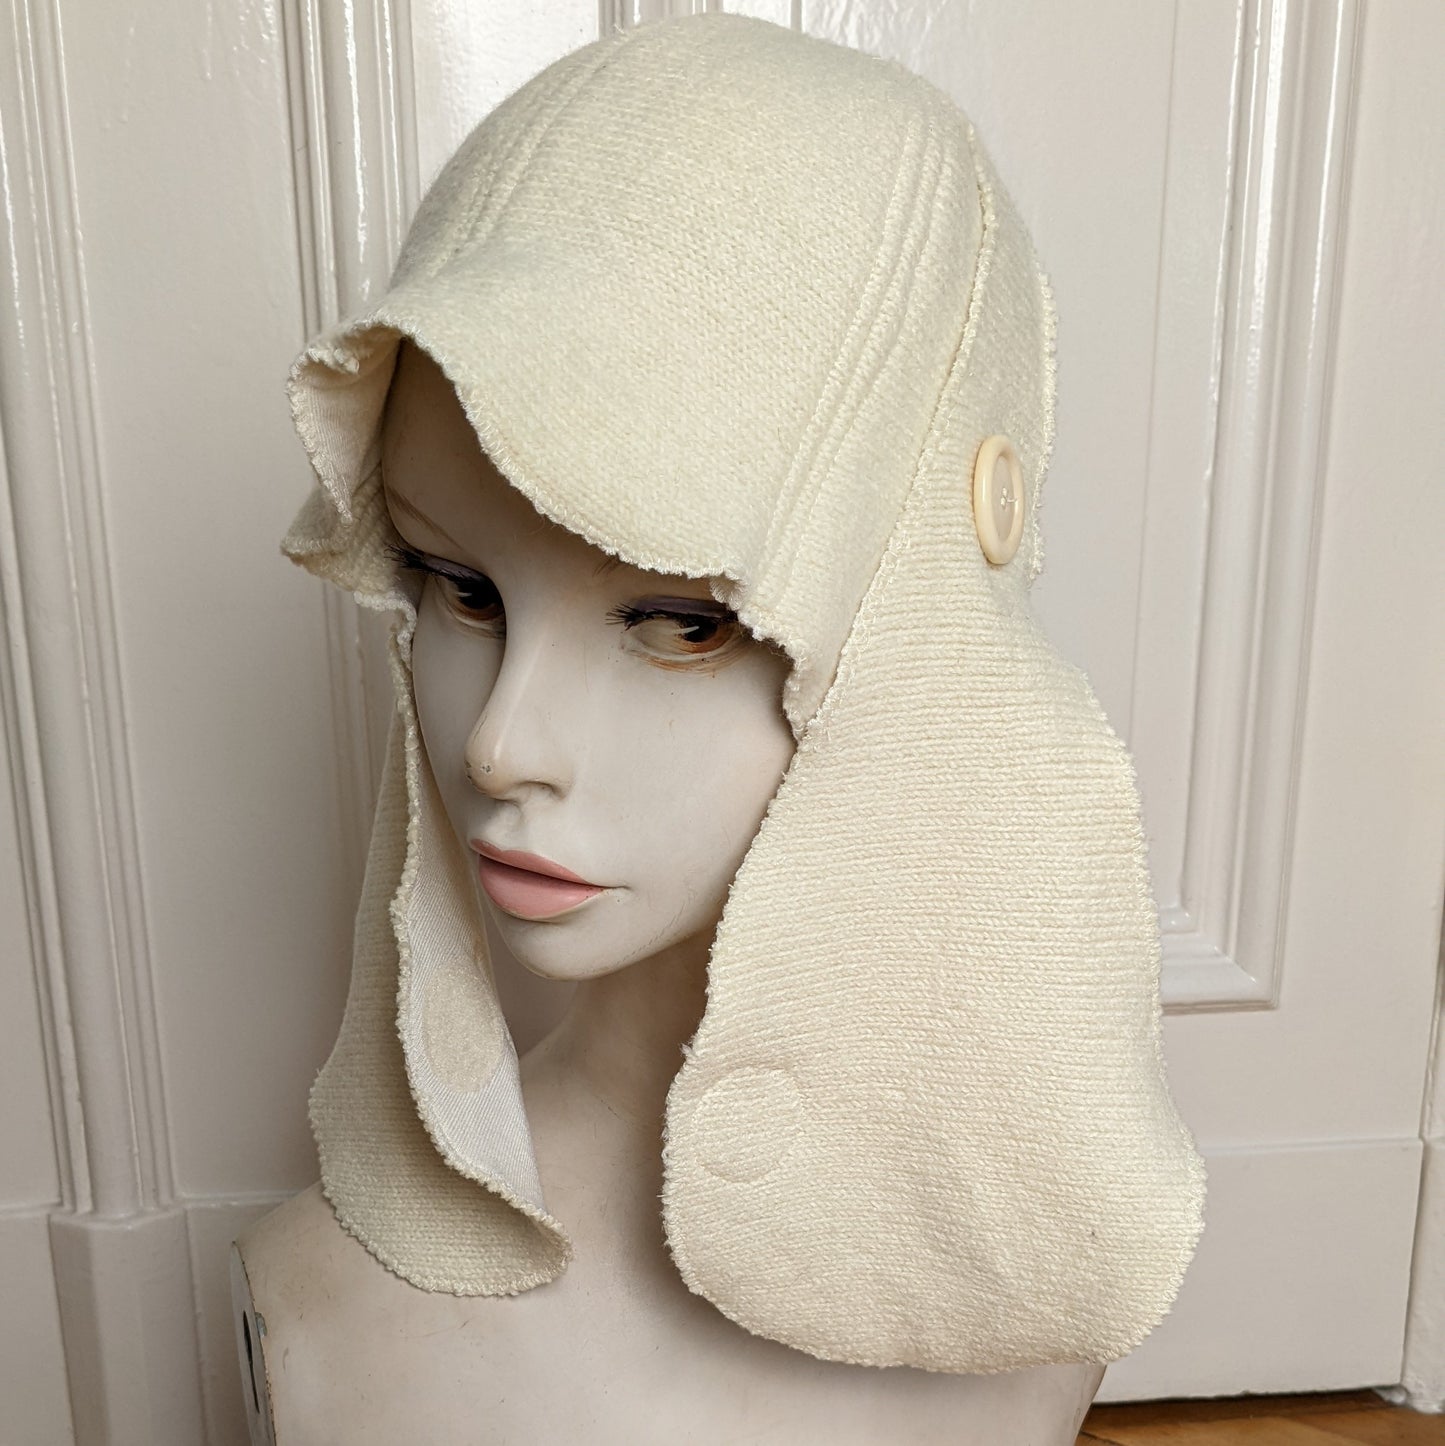 ꒰⑅ᵕ༚ᵕ꒱˖♡ eggshell white virgin wool orchid bonnet ♡˖꒰ᵕ༚ᵕ⑅꒱